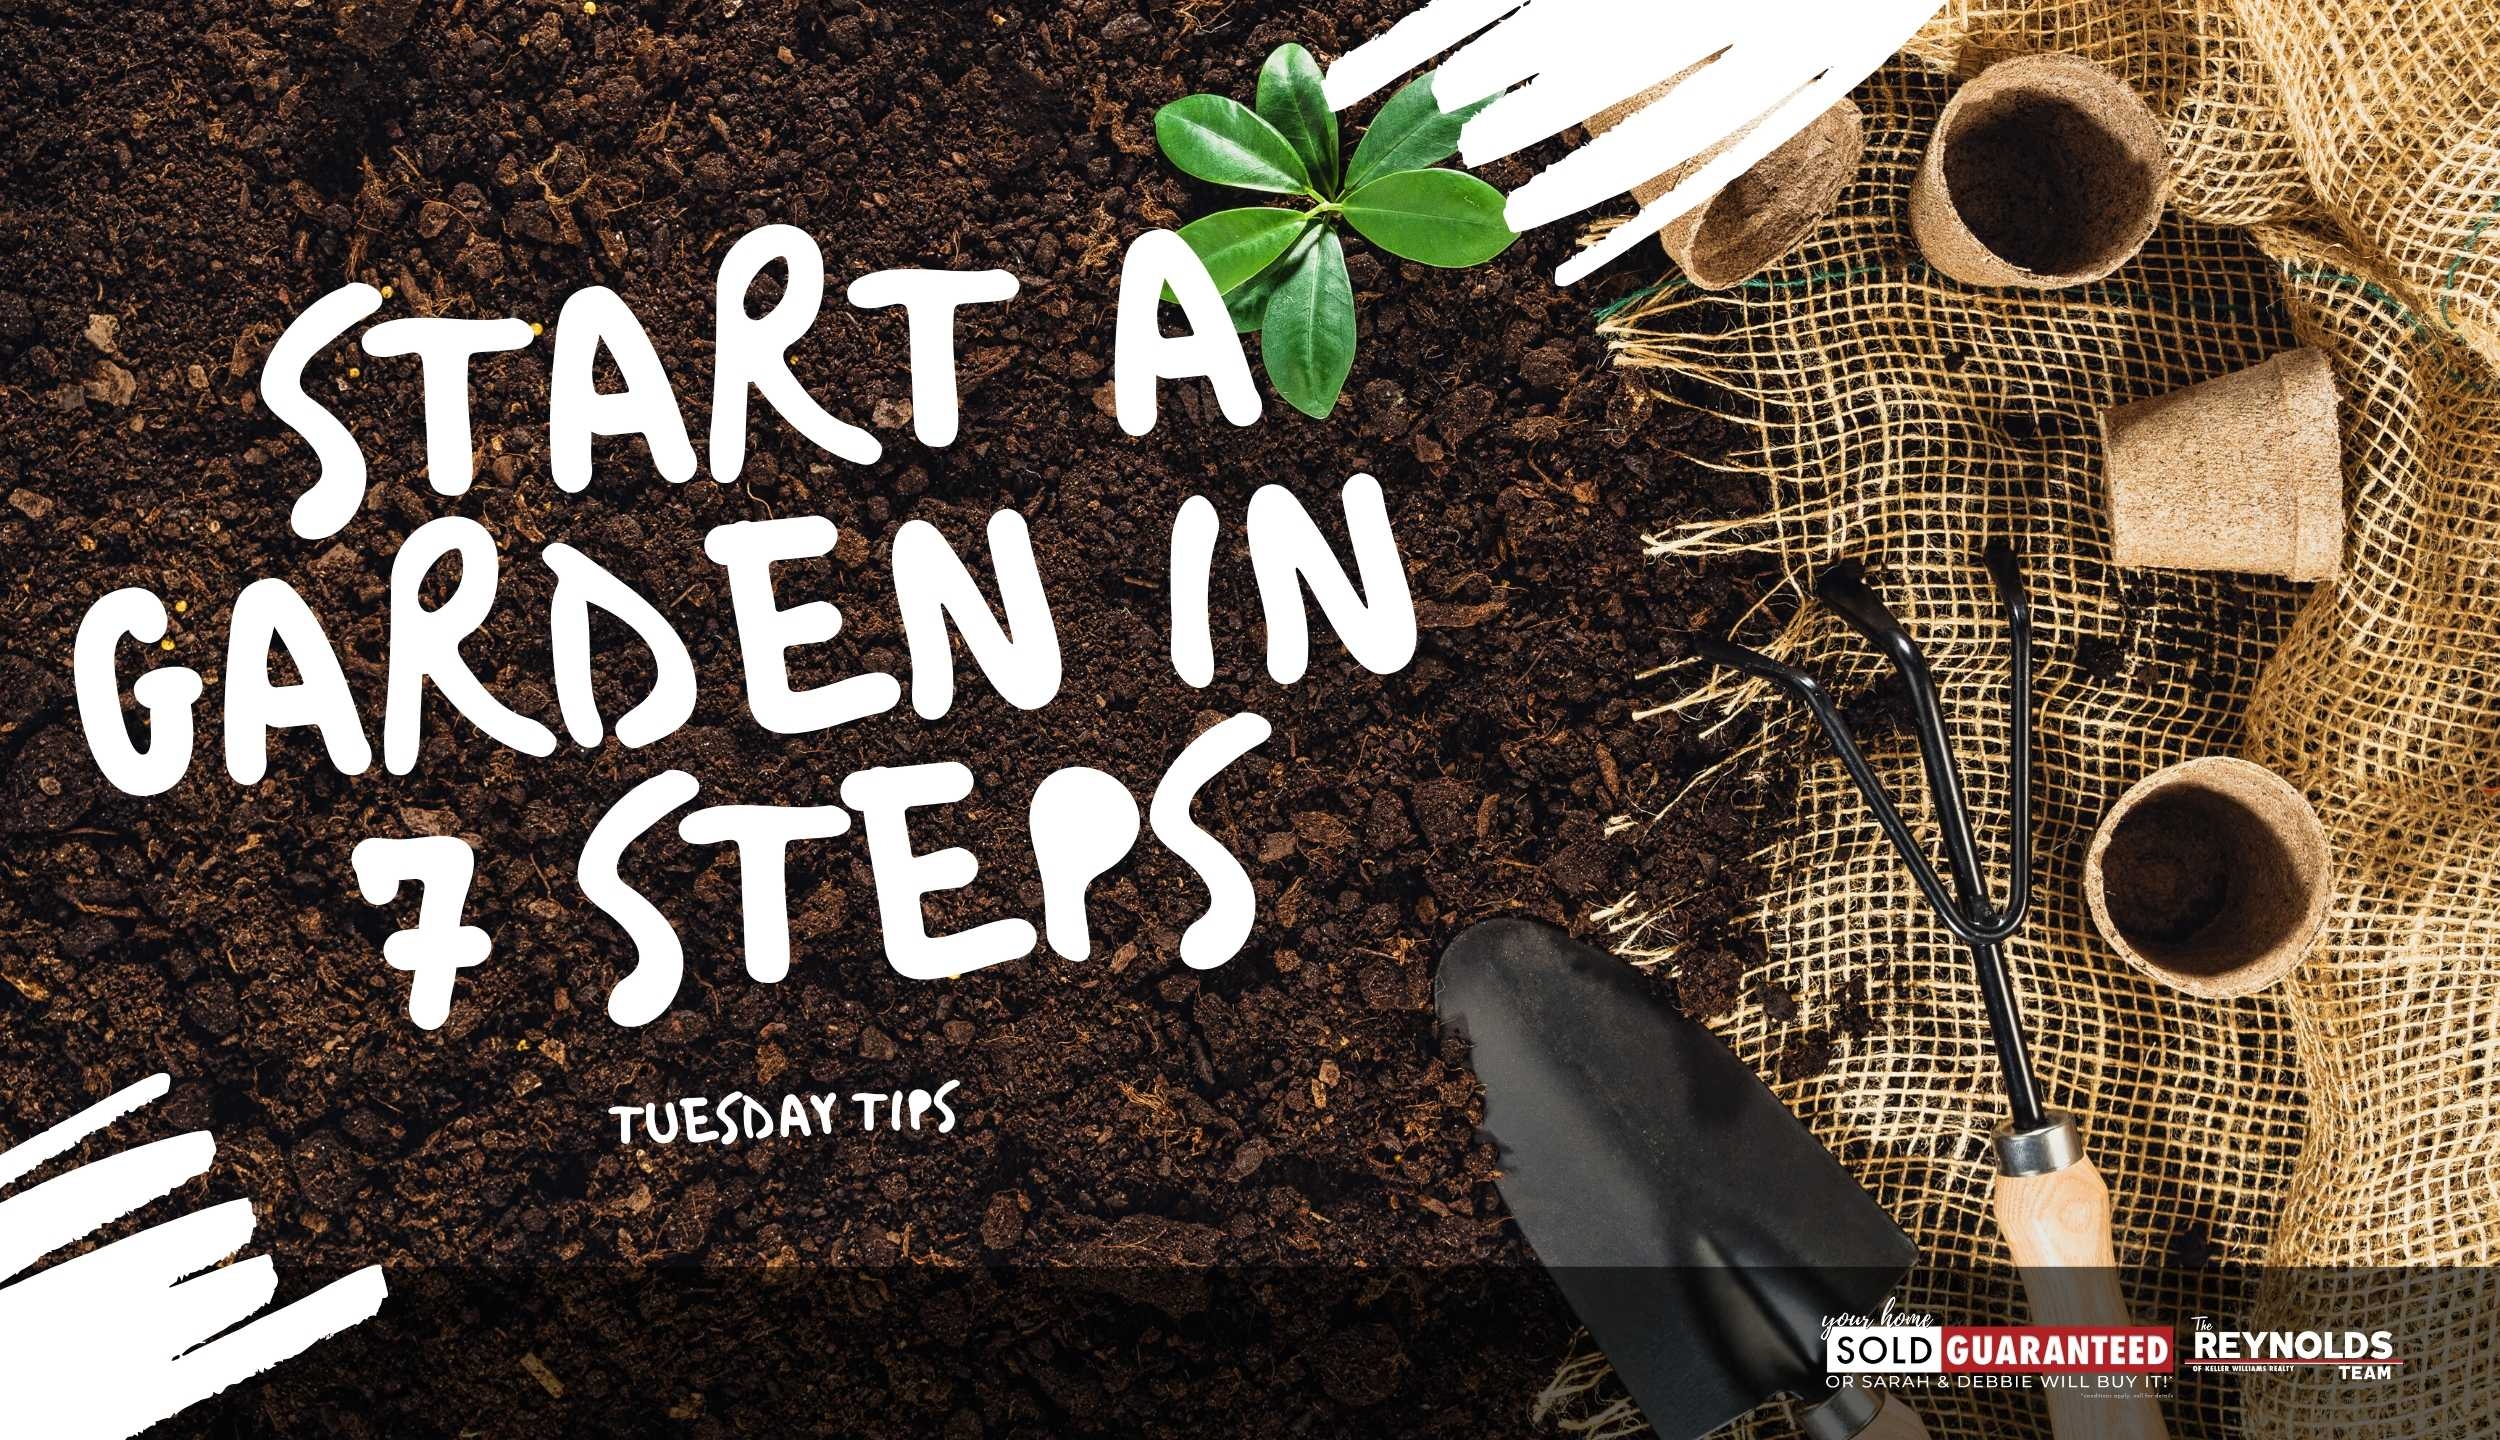 TUESDAY TIPS: Start a Garden in 7 Steps